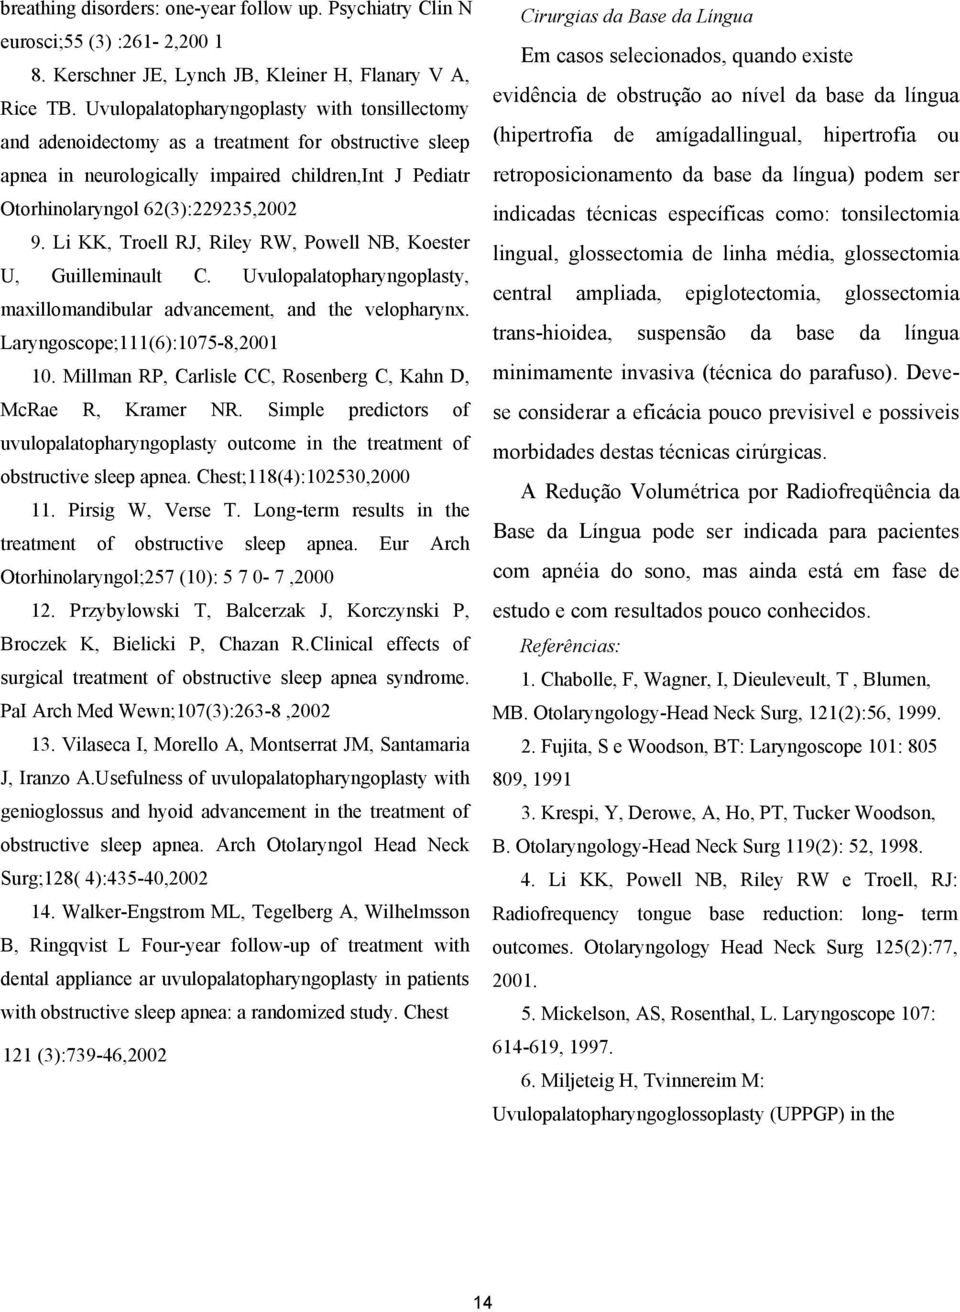 Li KK, Troell RJ, Riley RW, Powell NB, Koester U, Guilleminault C. Uvulopalatopharyngoplasty, maxillomandibular advancement, and the velopharynx. Laryngoscope;111(6):1075-8,2001 10.